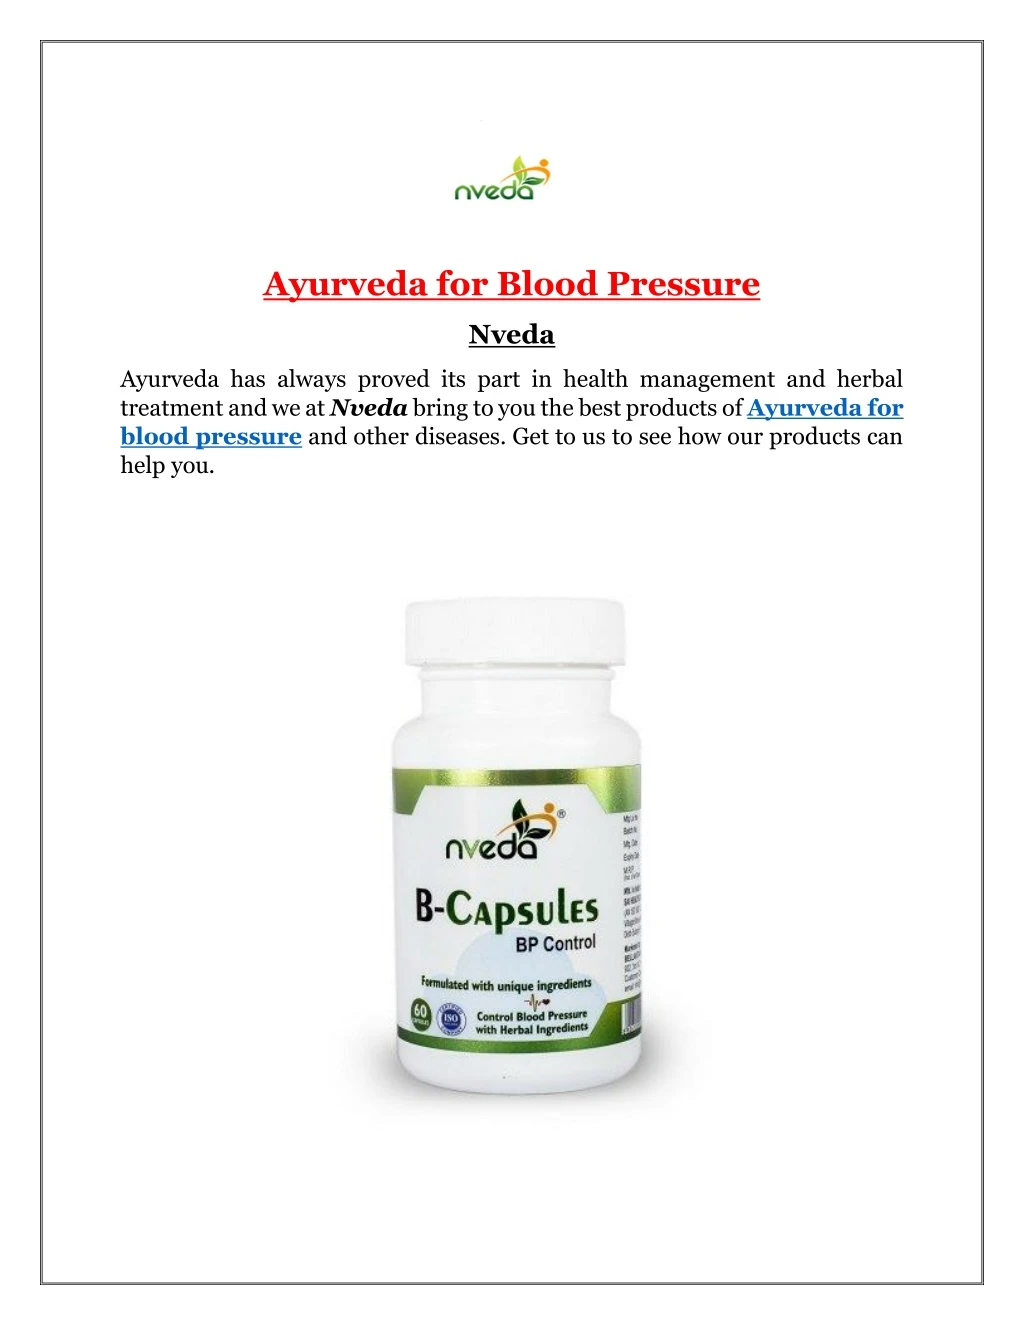 ayurveda for blood pressure